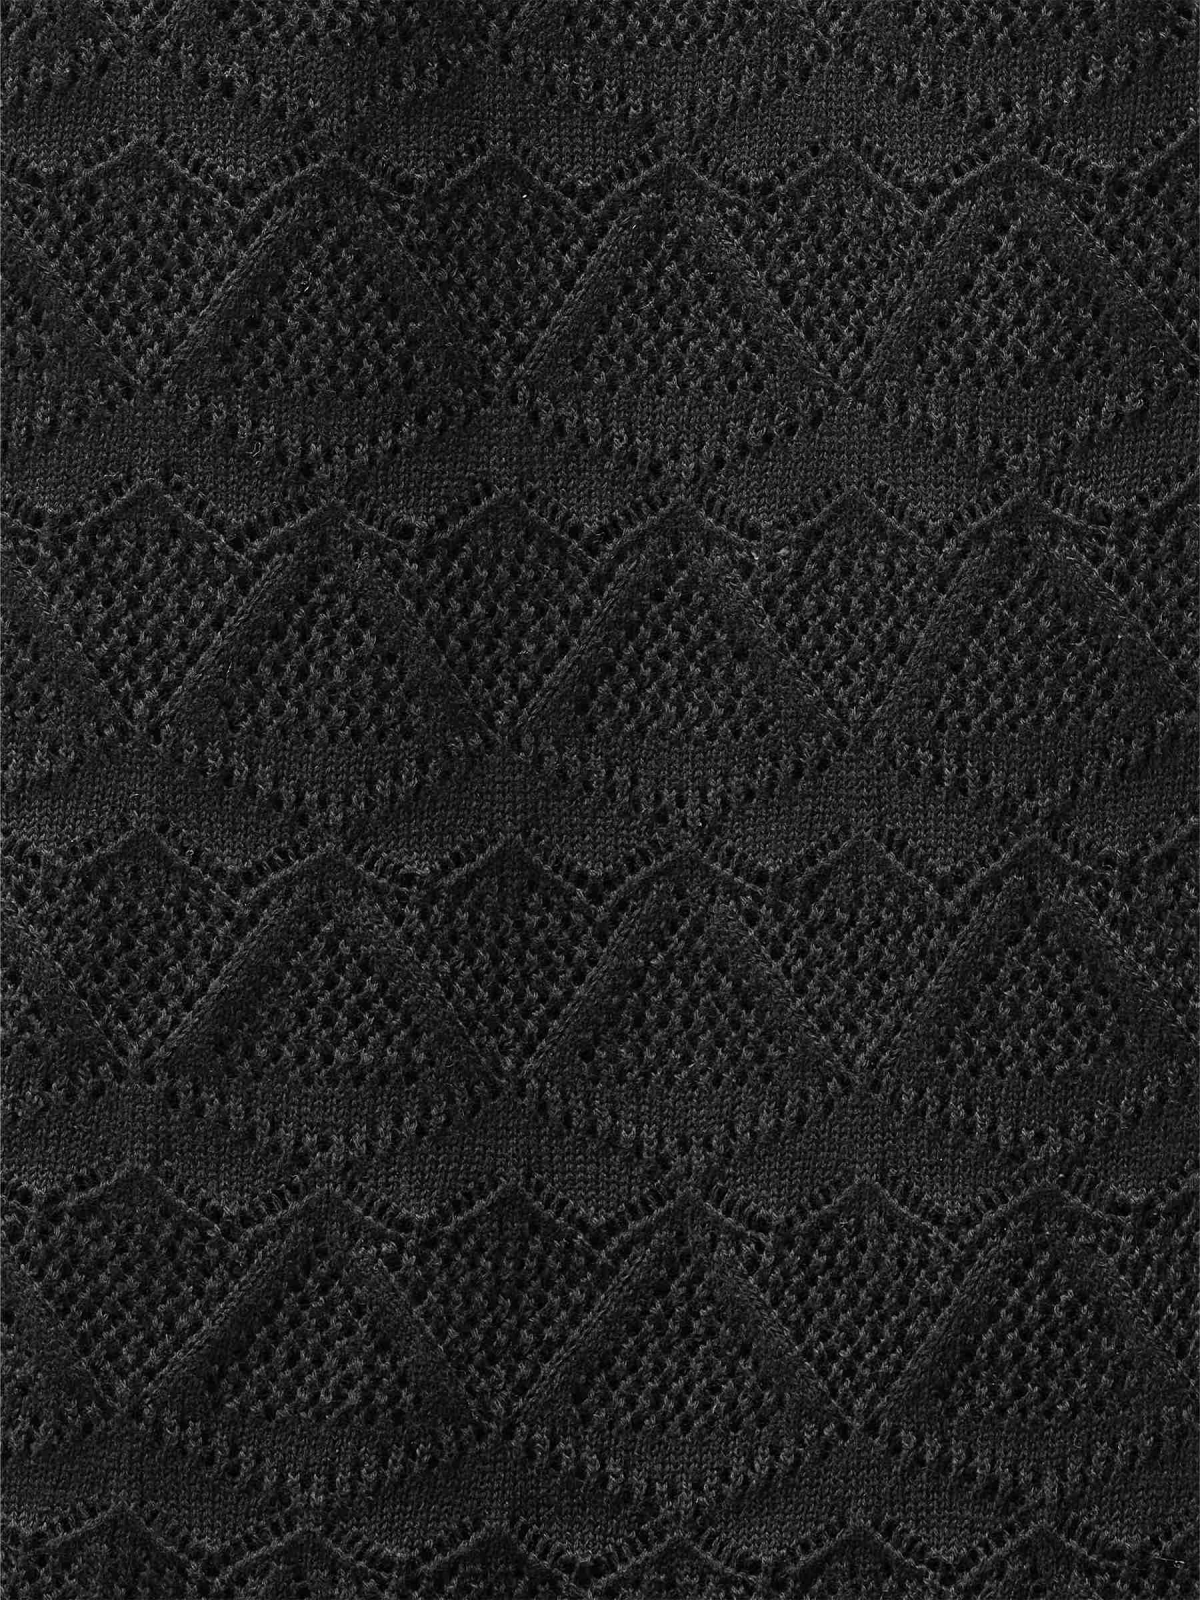 Crochet flare pants black detail view